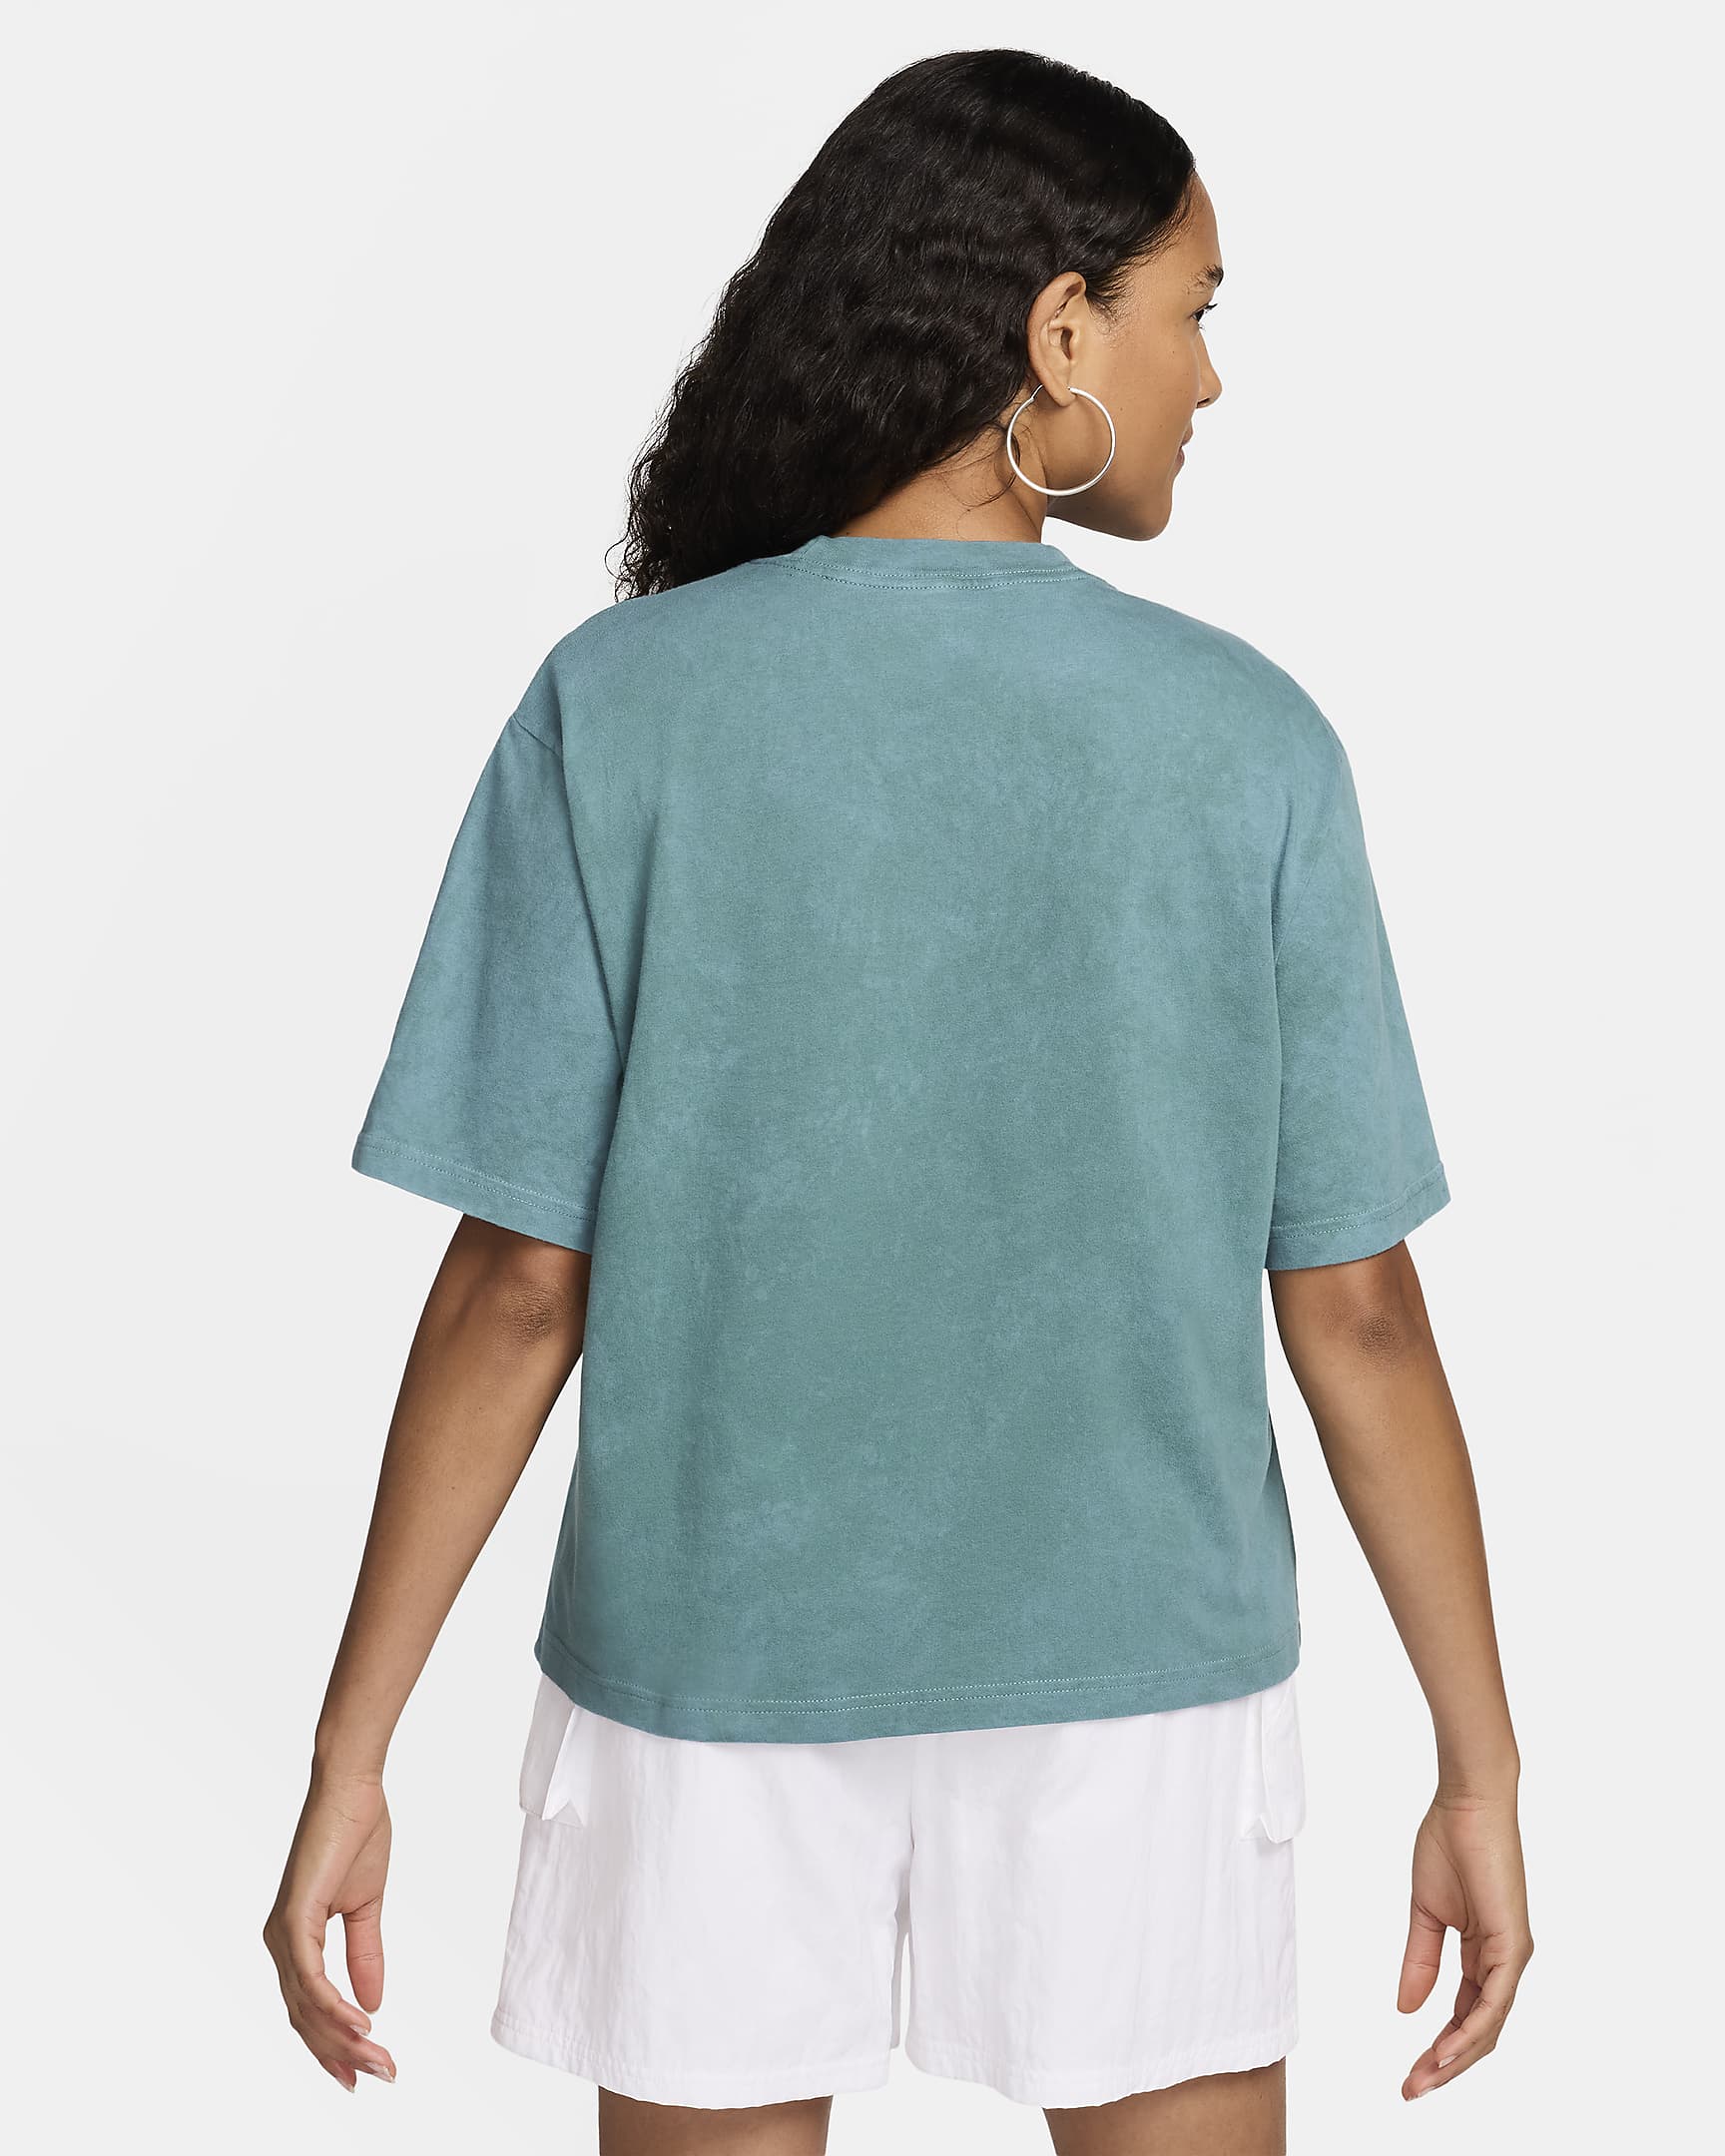 Nike Sportswear Women's T-Shirt - Bicoastal/Bicoastal